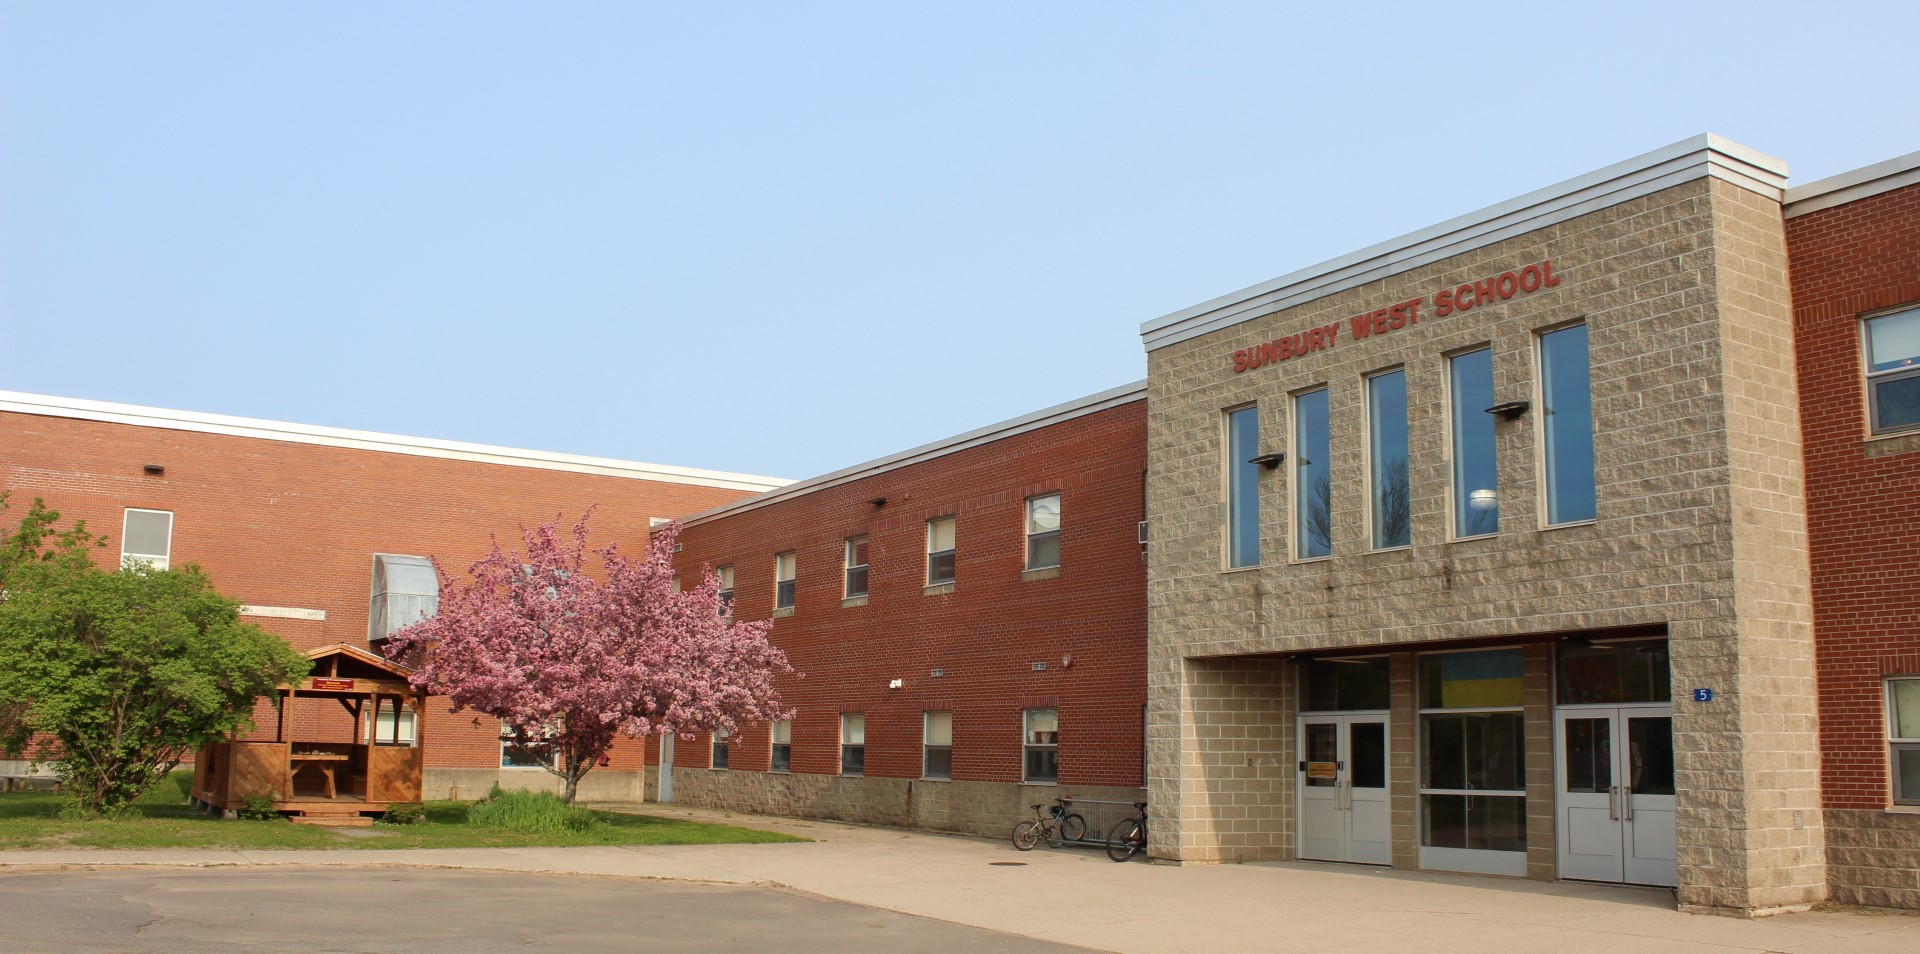 Sunbury West School.